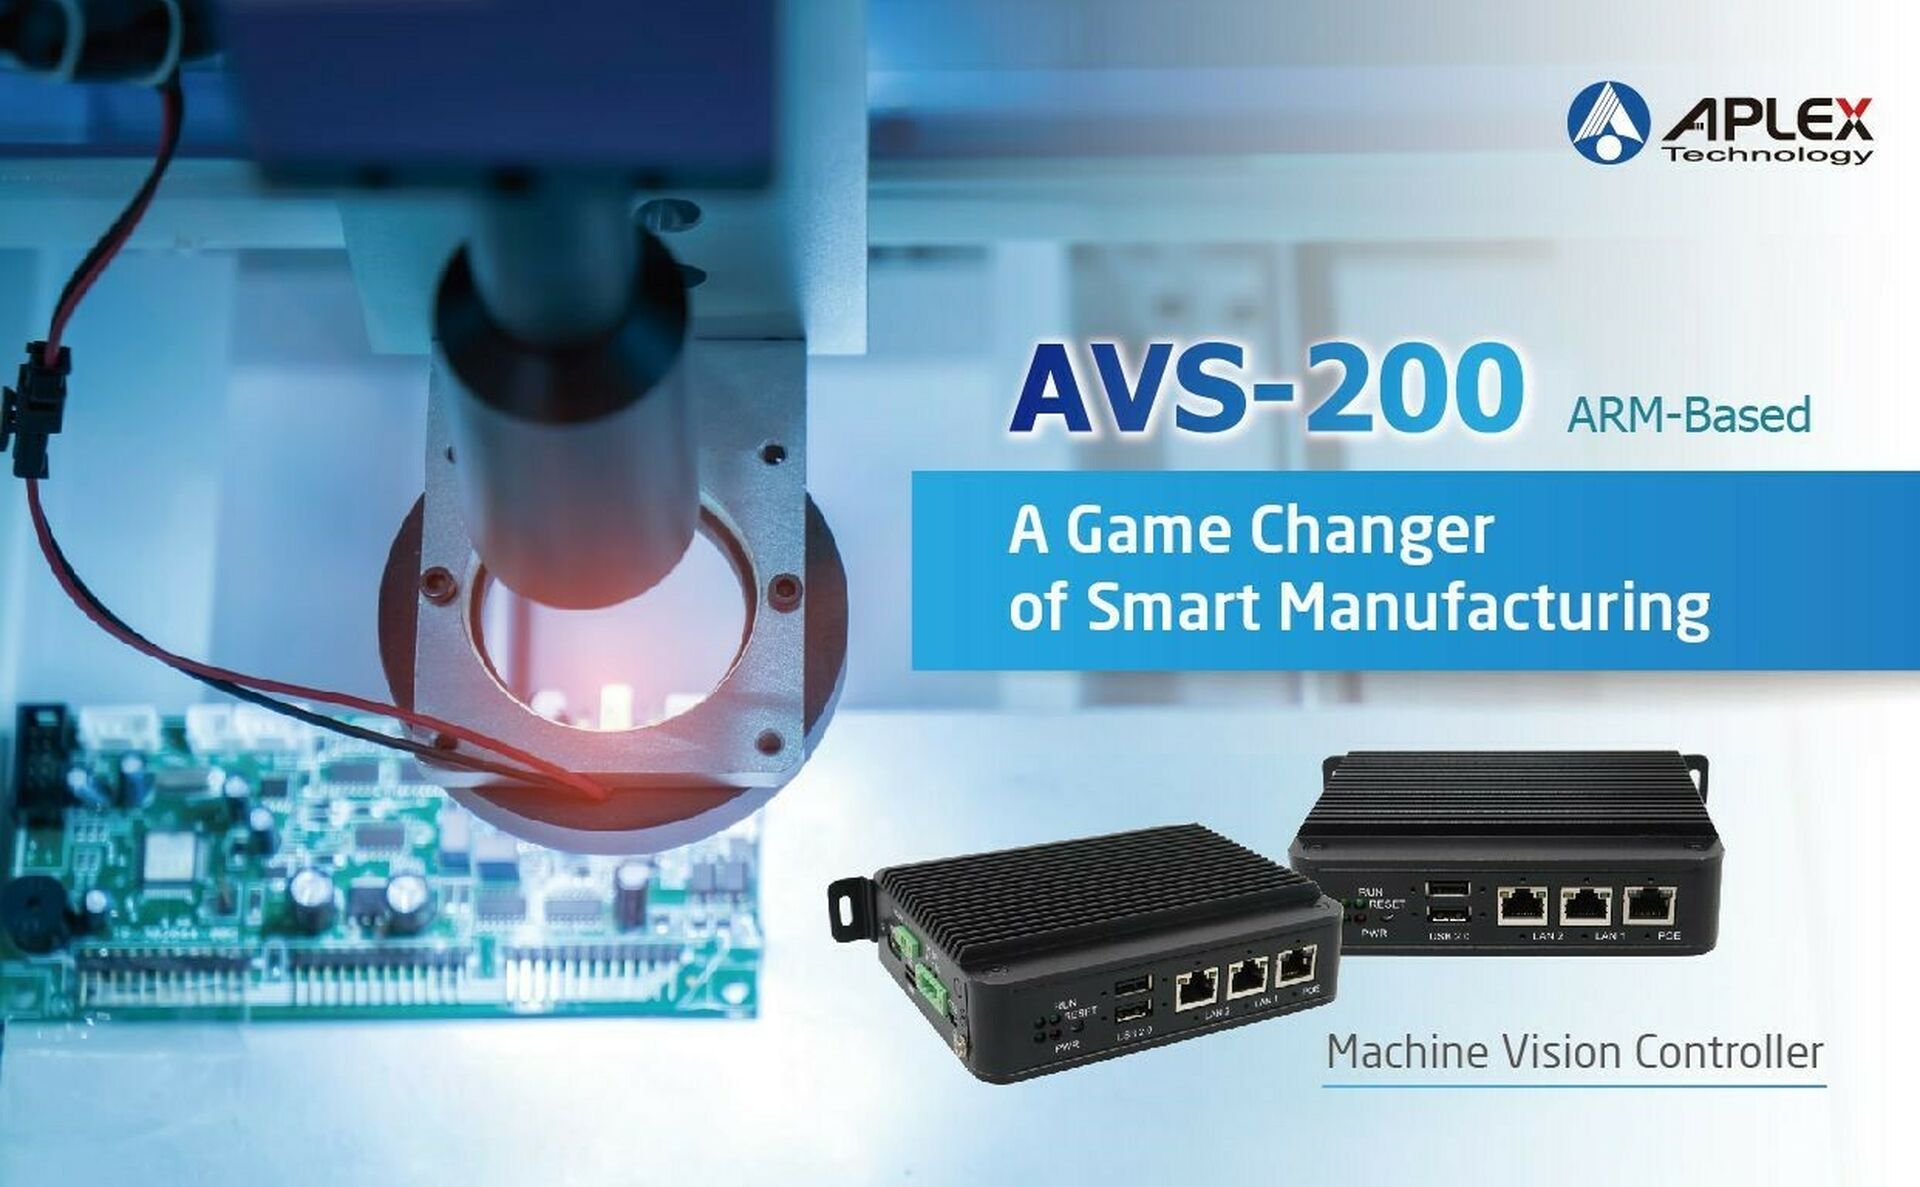 Aplex AVS 200 machine vision controller